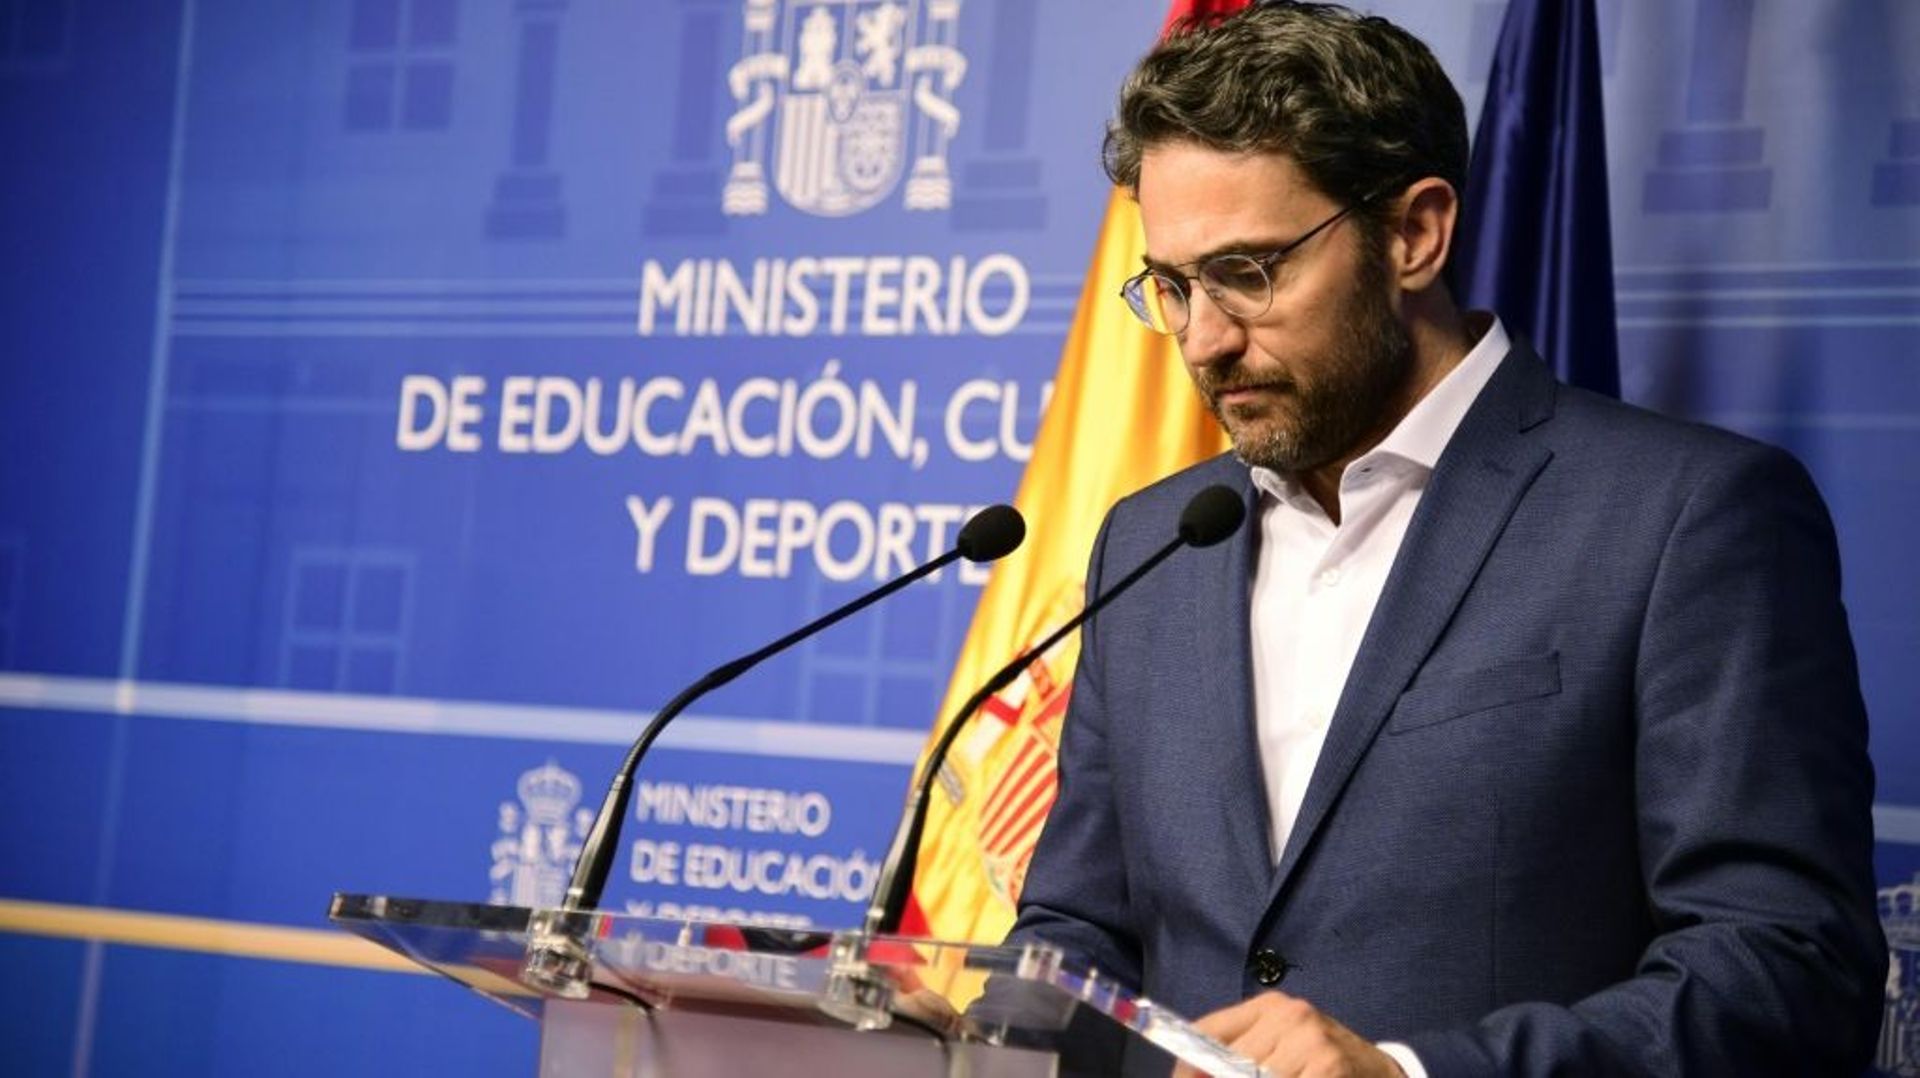 Le ministre de la Culture espagnol Maxim Huerta en conférence de presse à Madrid, le 13 juin 2018